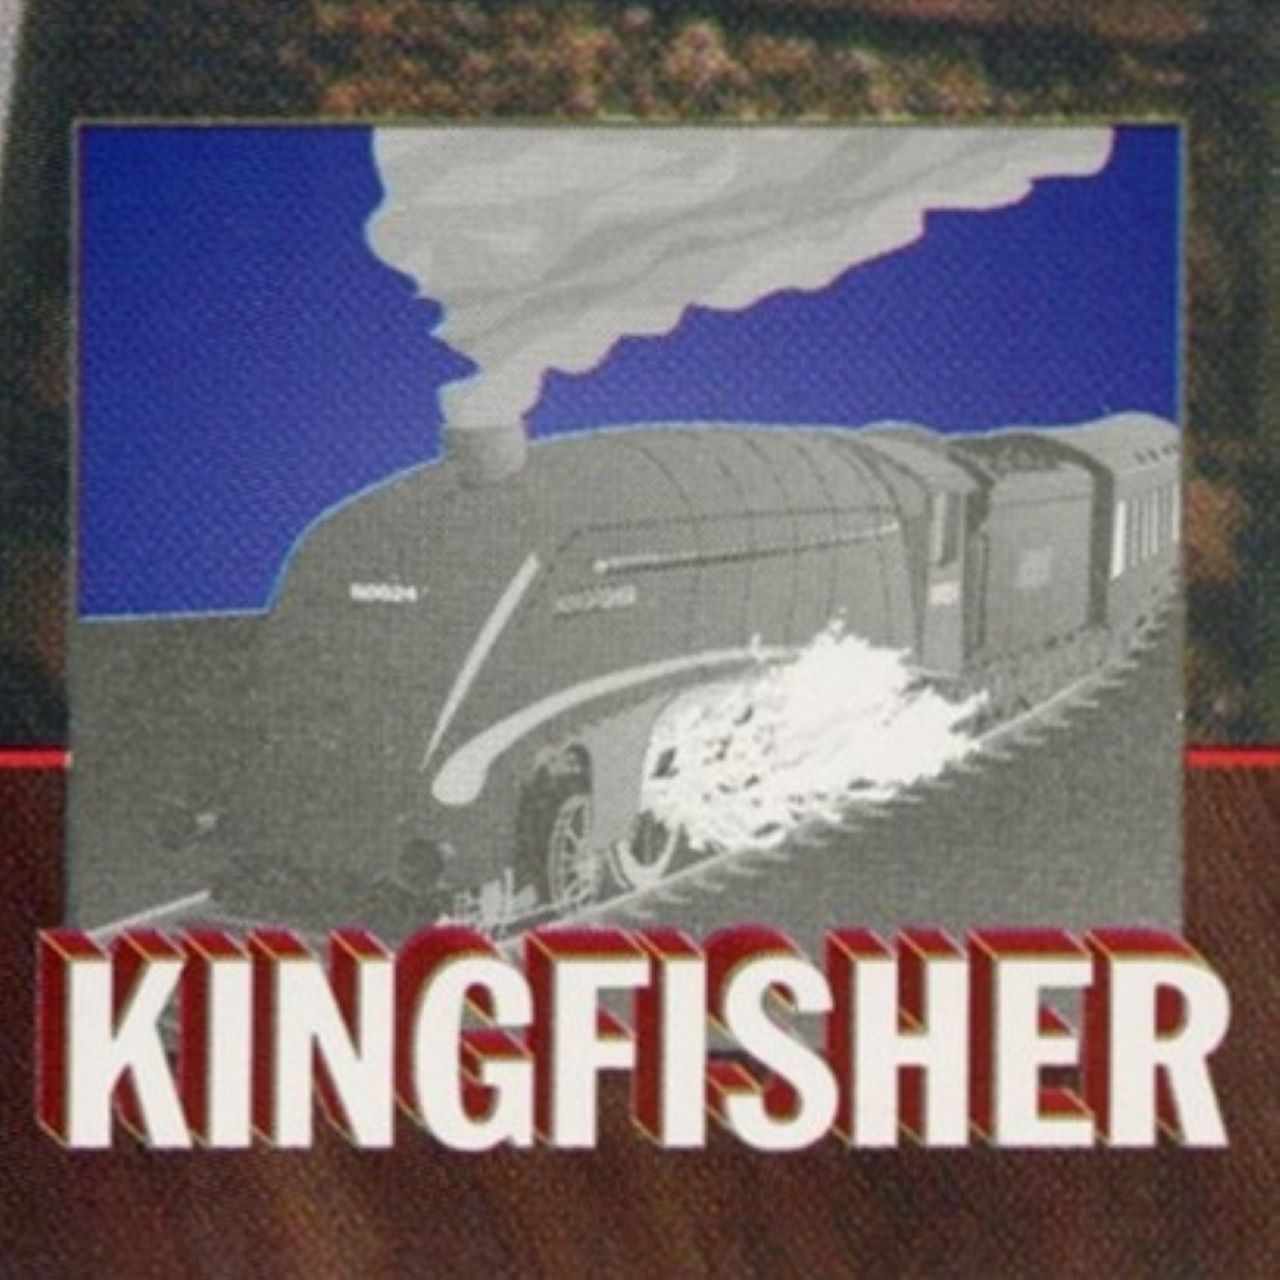 Kingfisher Records logo